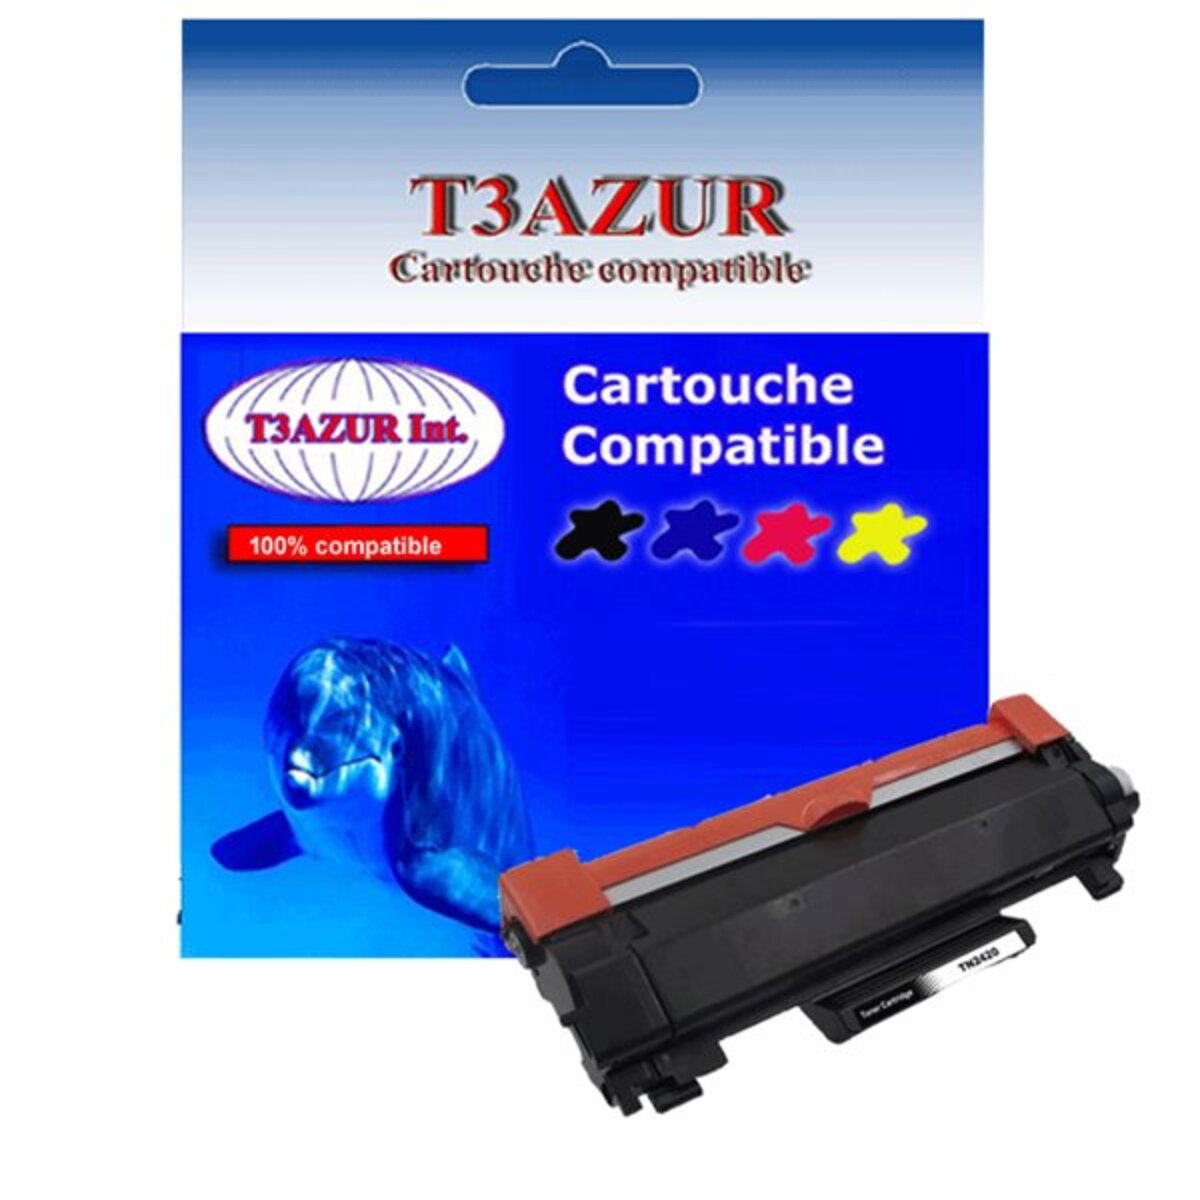 Toner T3AZUR Toner compatible Brother TN2420/ TN2410 - 3 000 pages